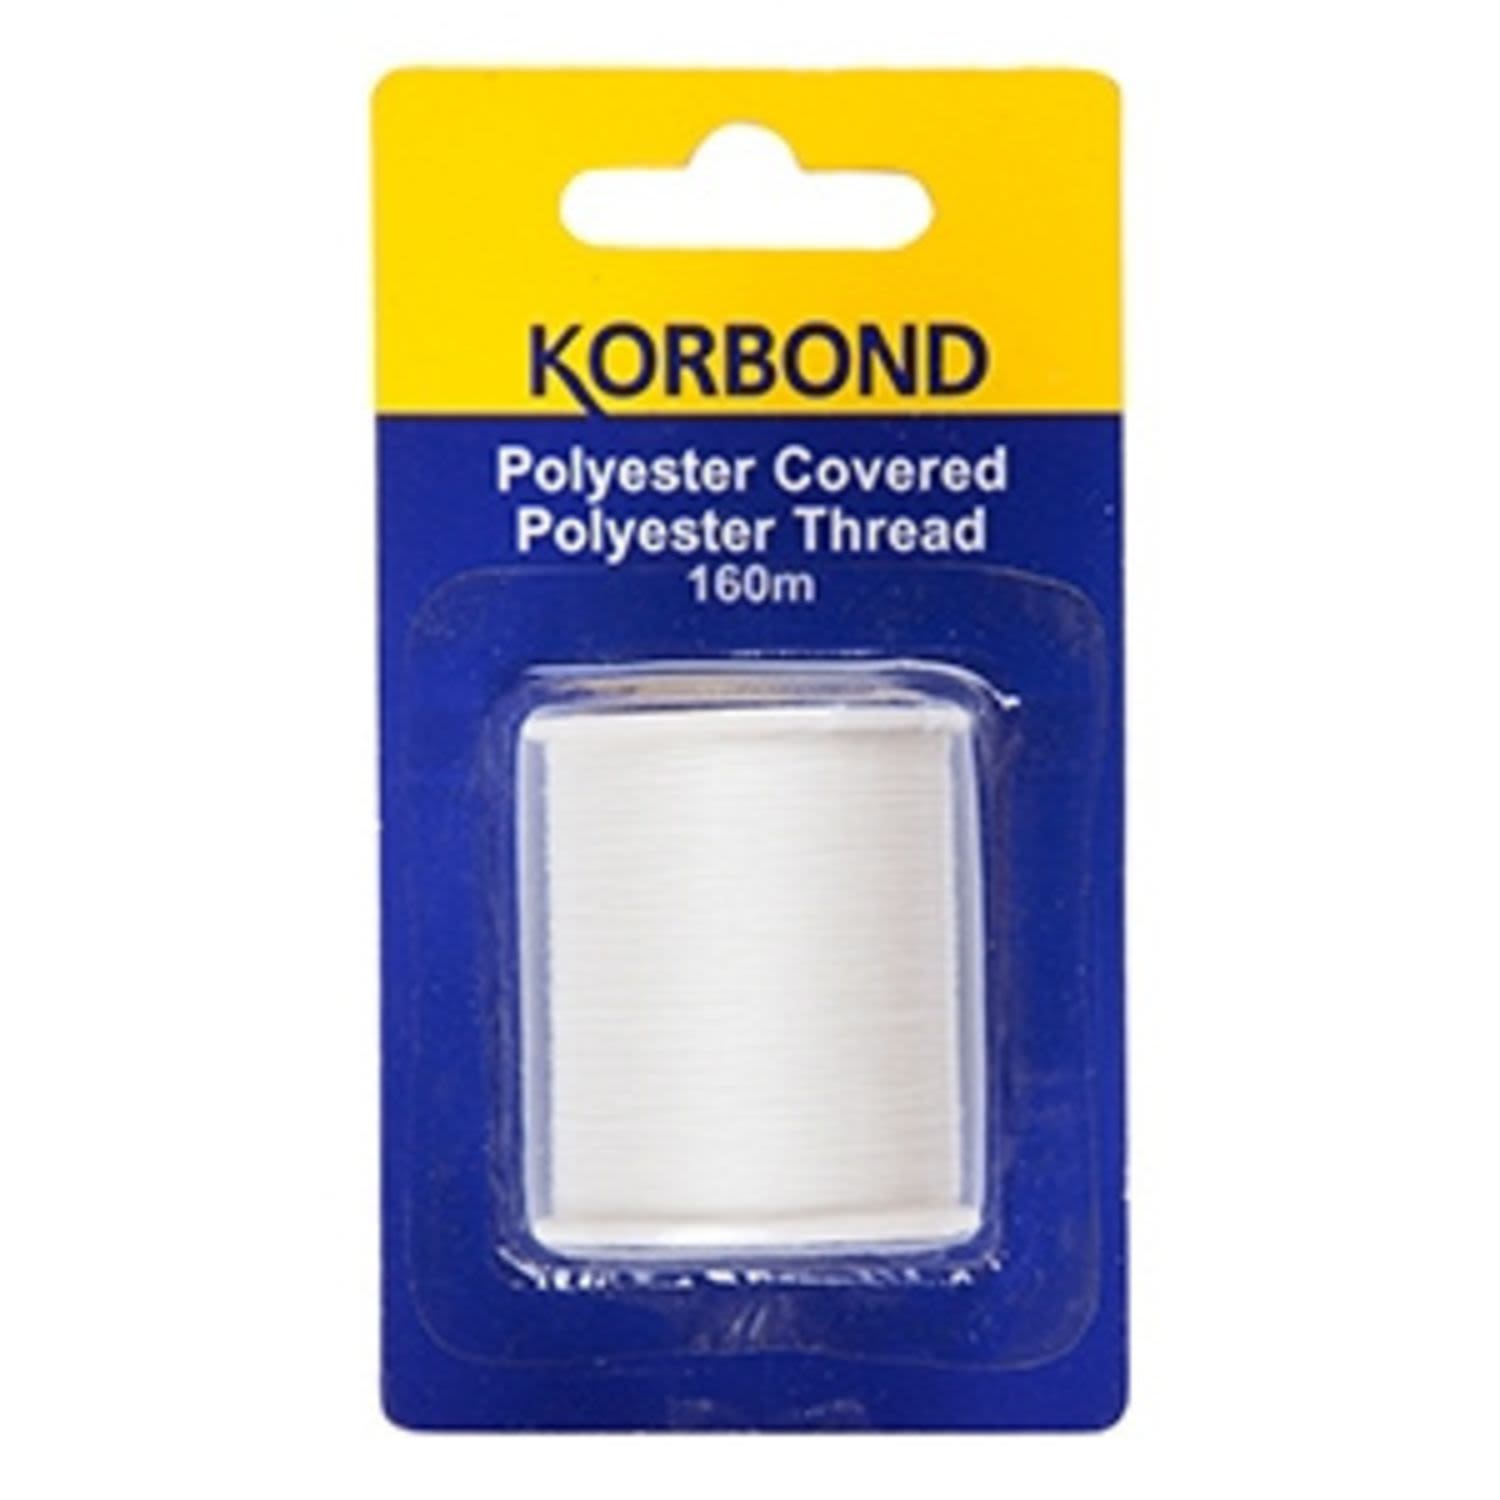 Korbond White Poly Thread 160m, 1 Each